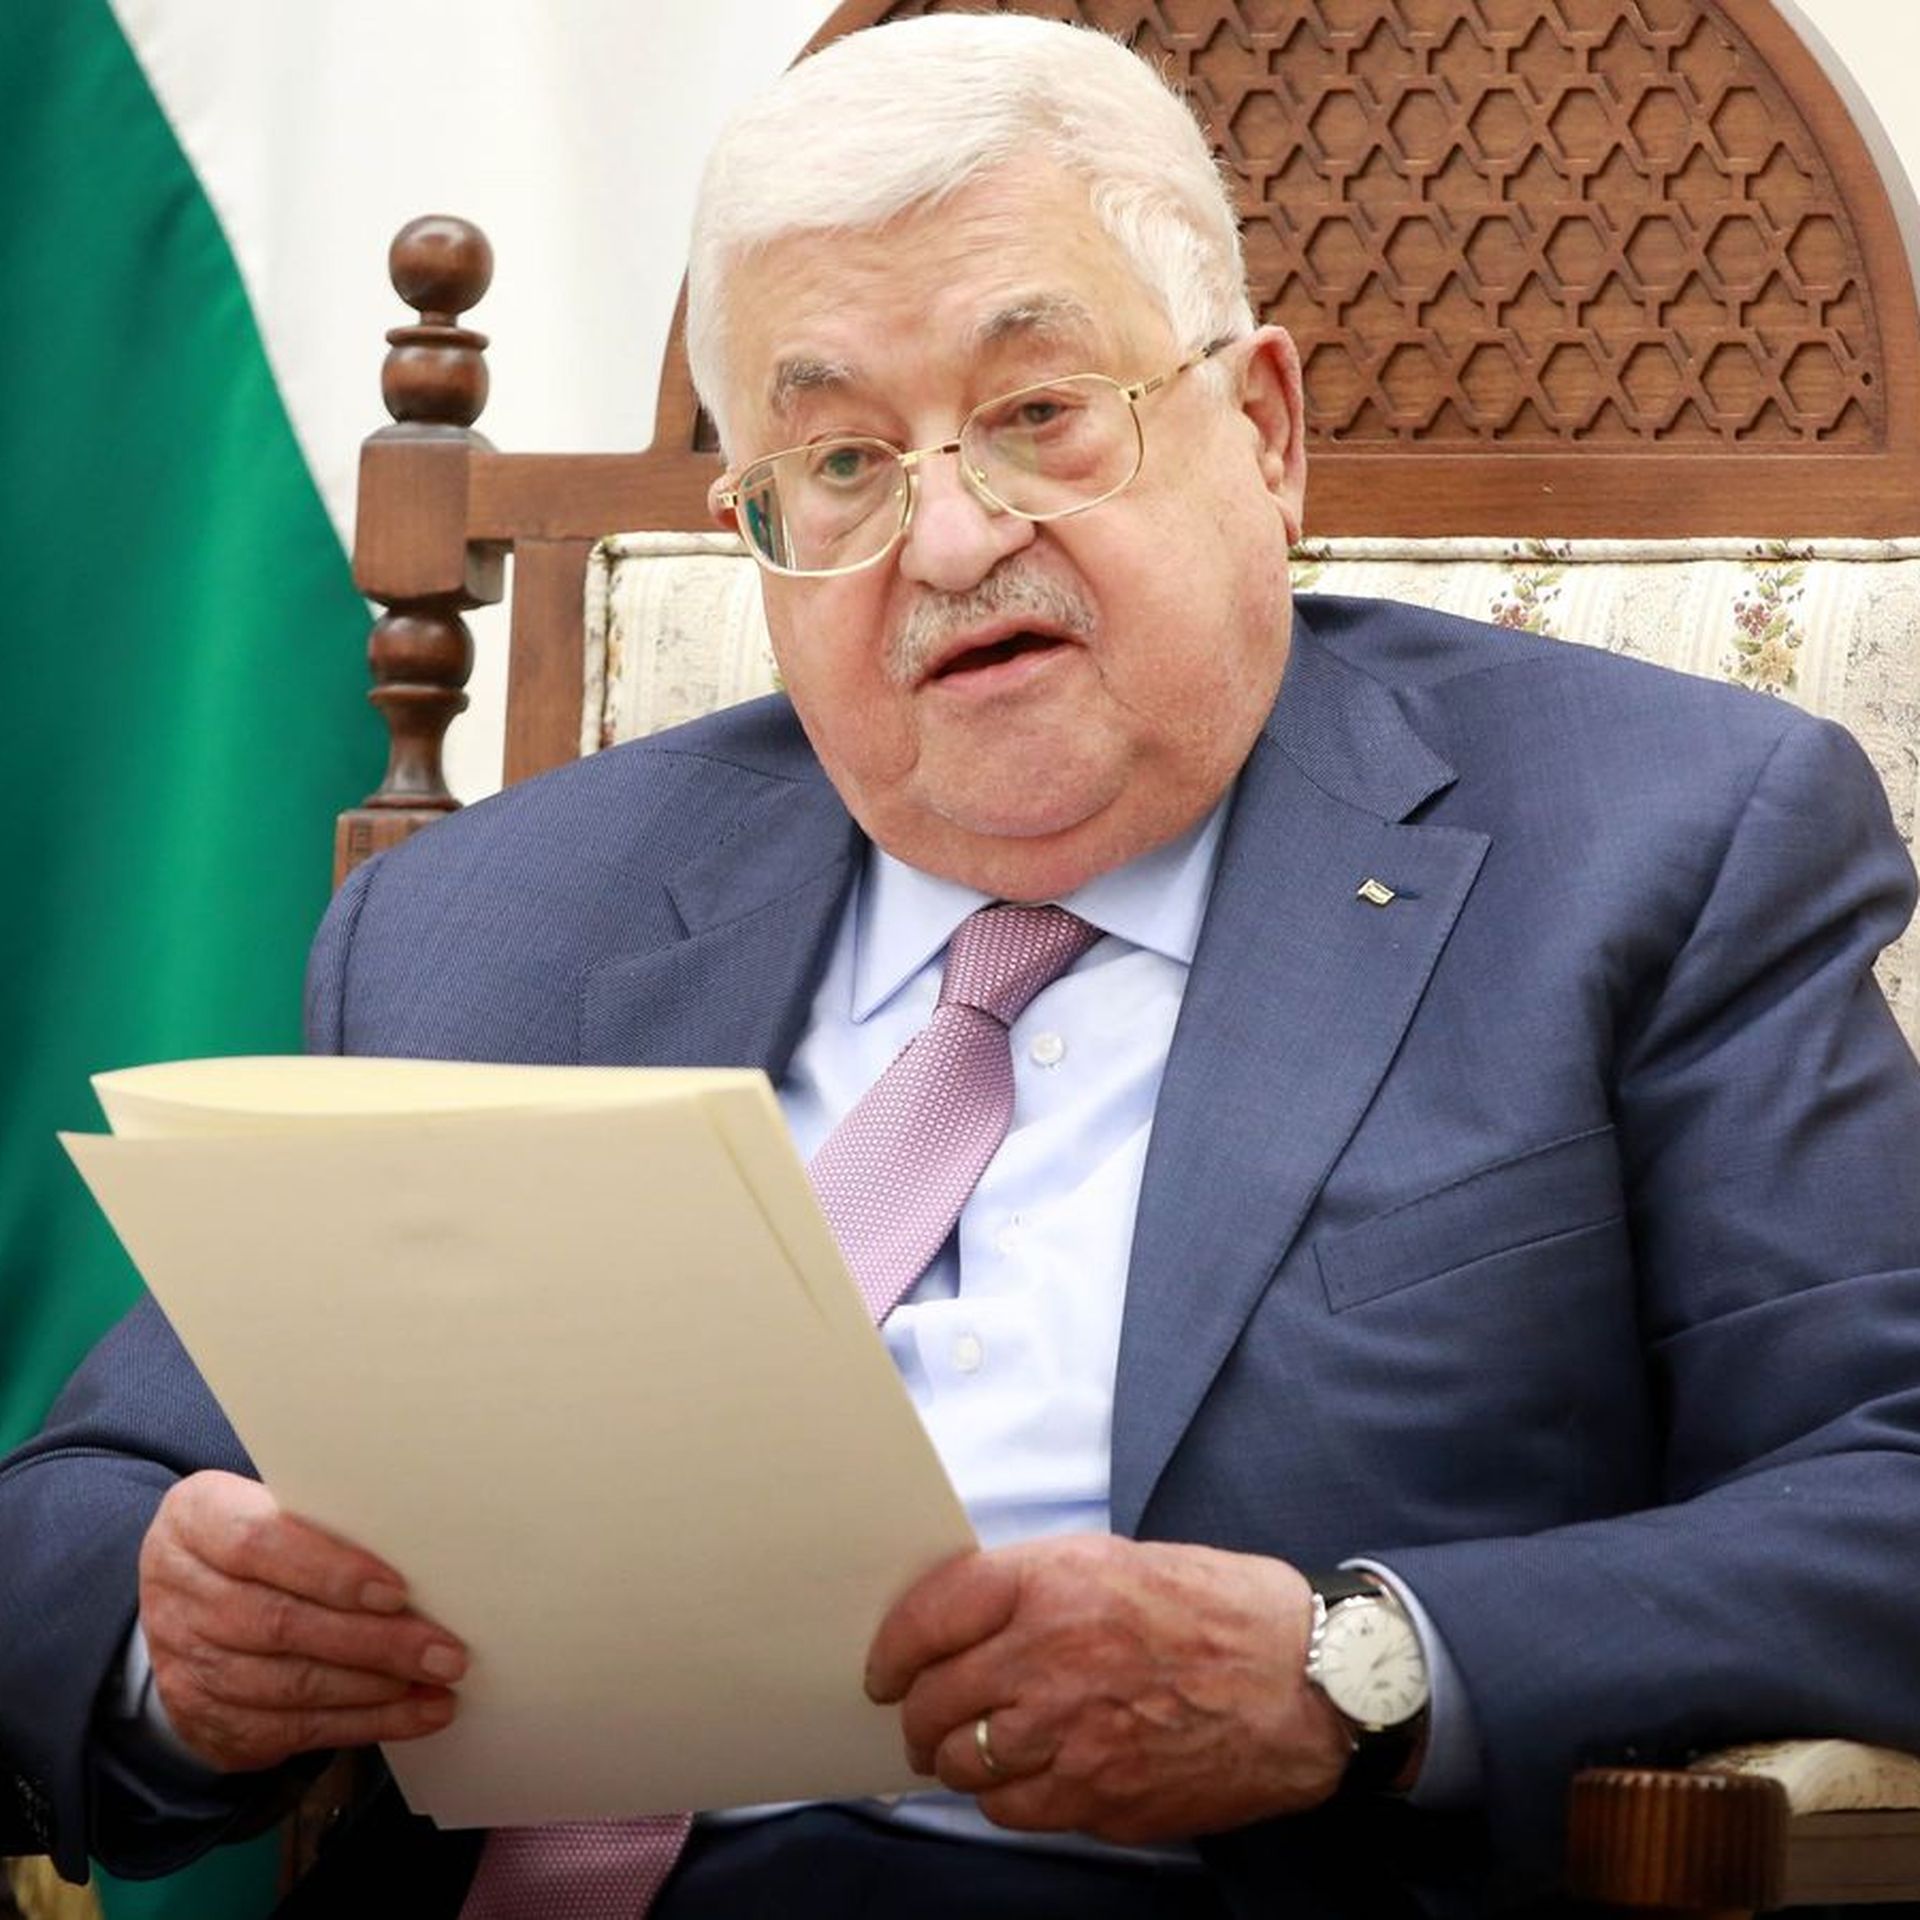 Palestinian President Mahmoud Abbas. Photo: Issam Rimawi/Anadolu Agency via Getty Images